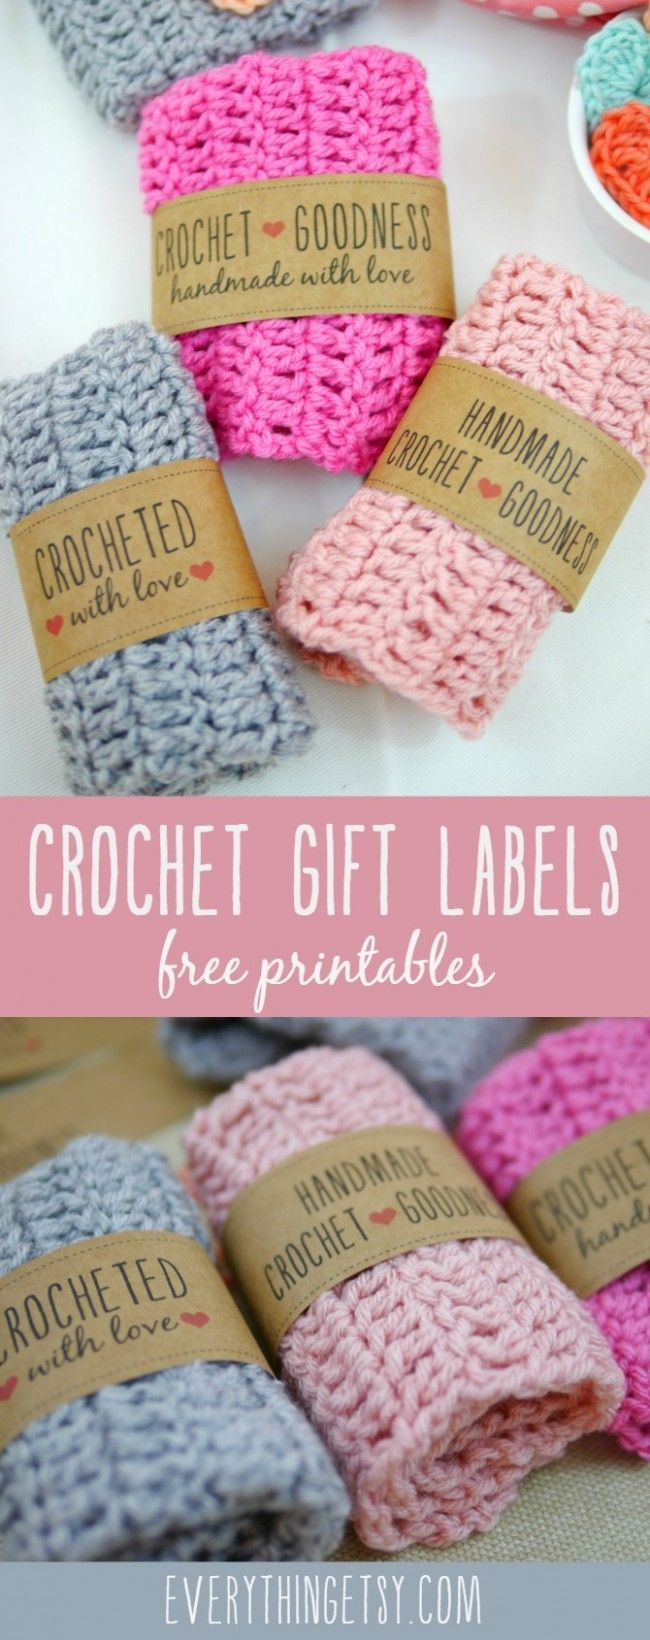 Free Printable Crochet Gift Labels | Crocheting | Pinterest - Free Printable Crochet Patterns